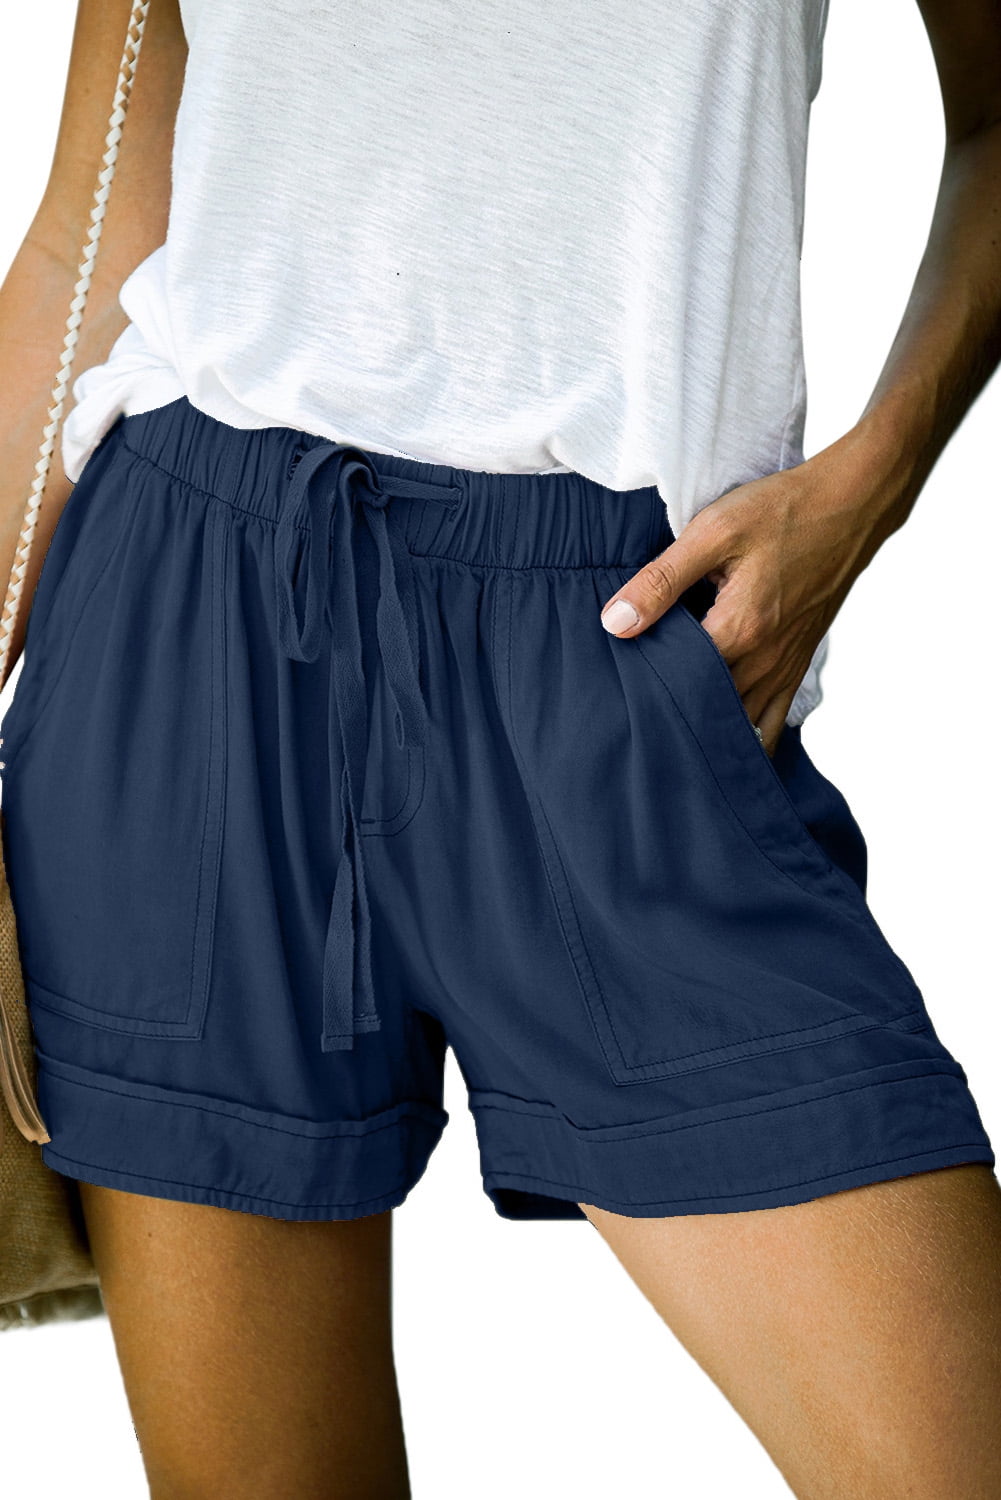 KISSMODA Comfy Shorts For Women Summer Savings Clearance Active Shorts ...